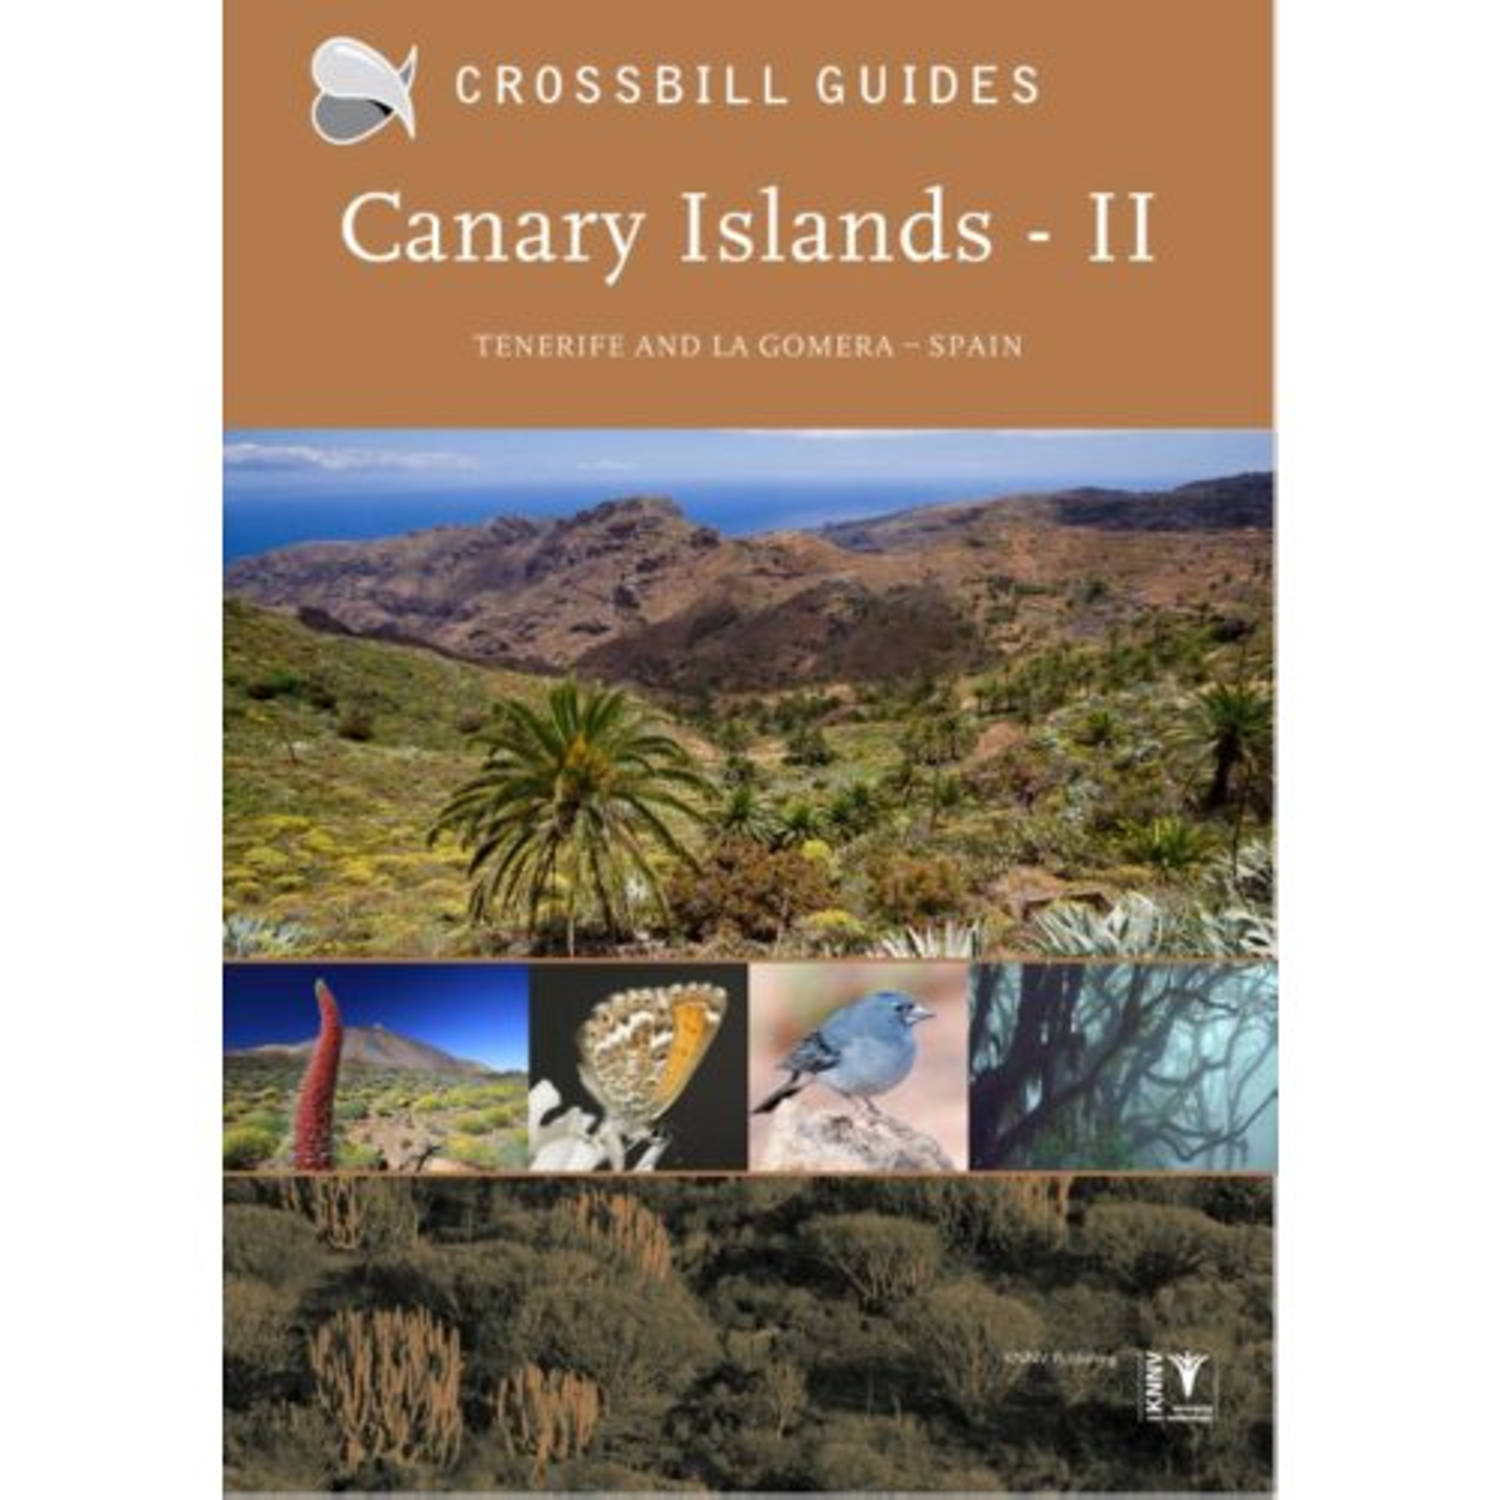 CANARY ISLANDS 2 - TENERIFE AND LA GOMER